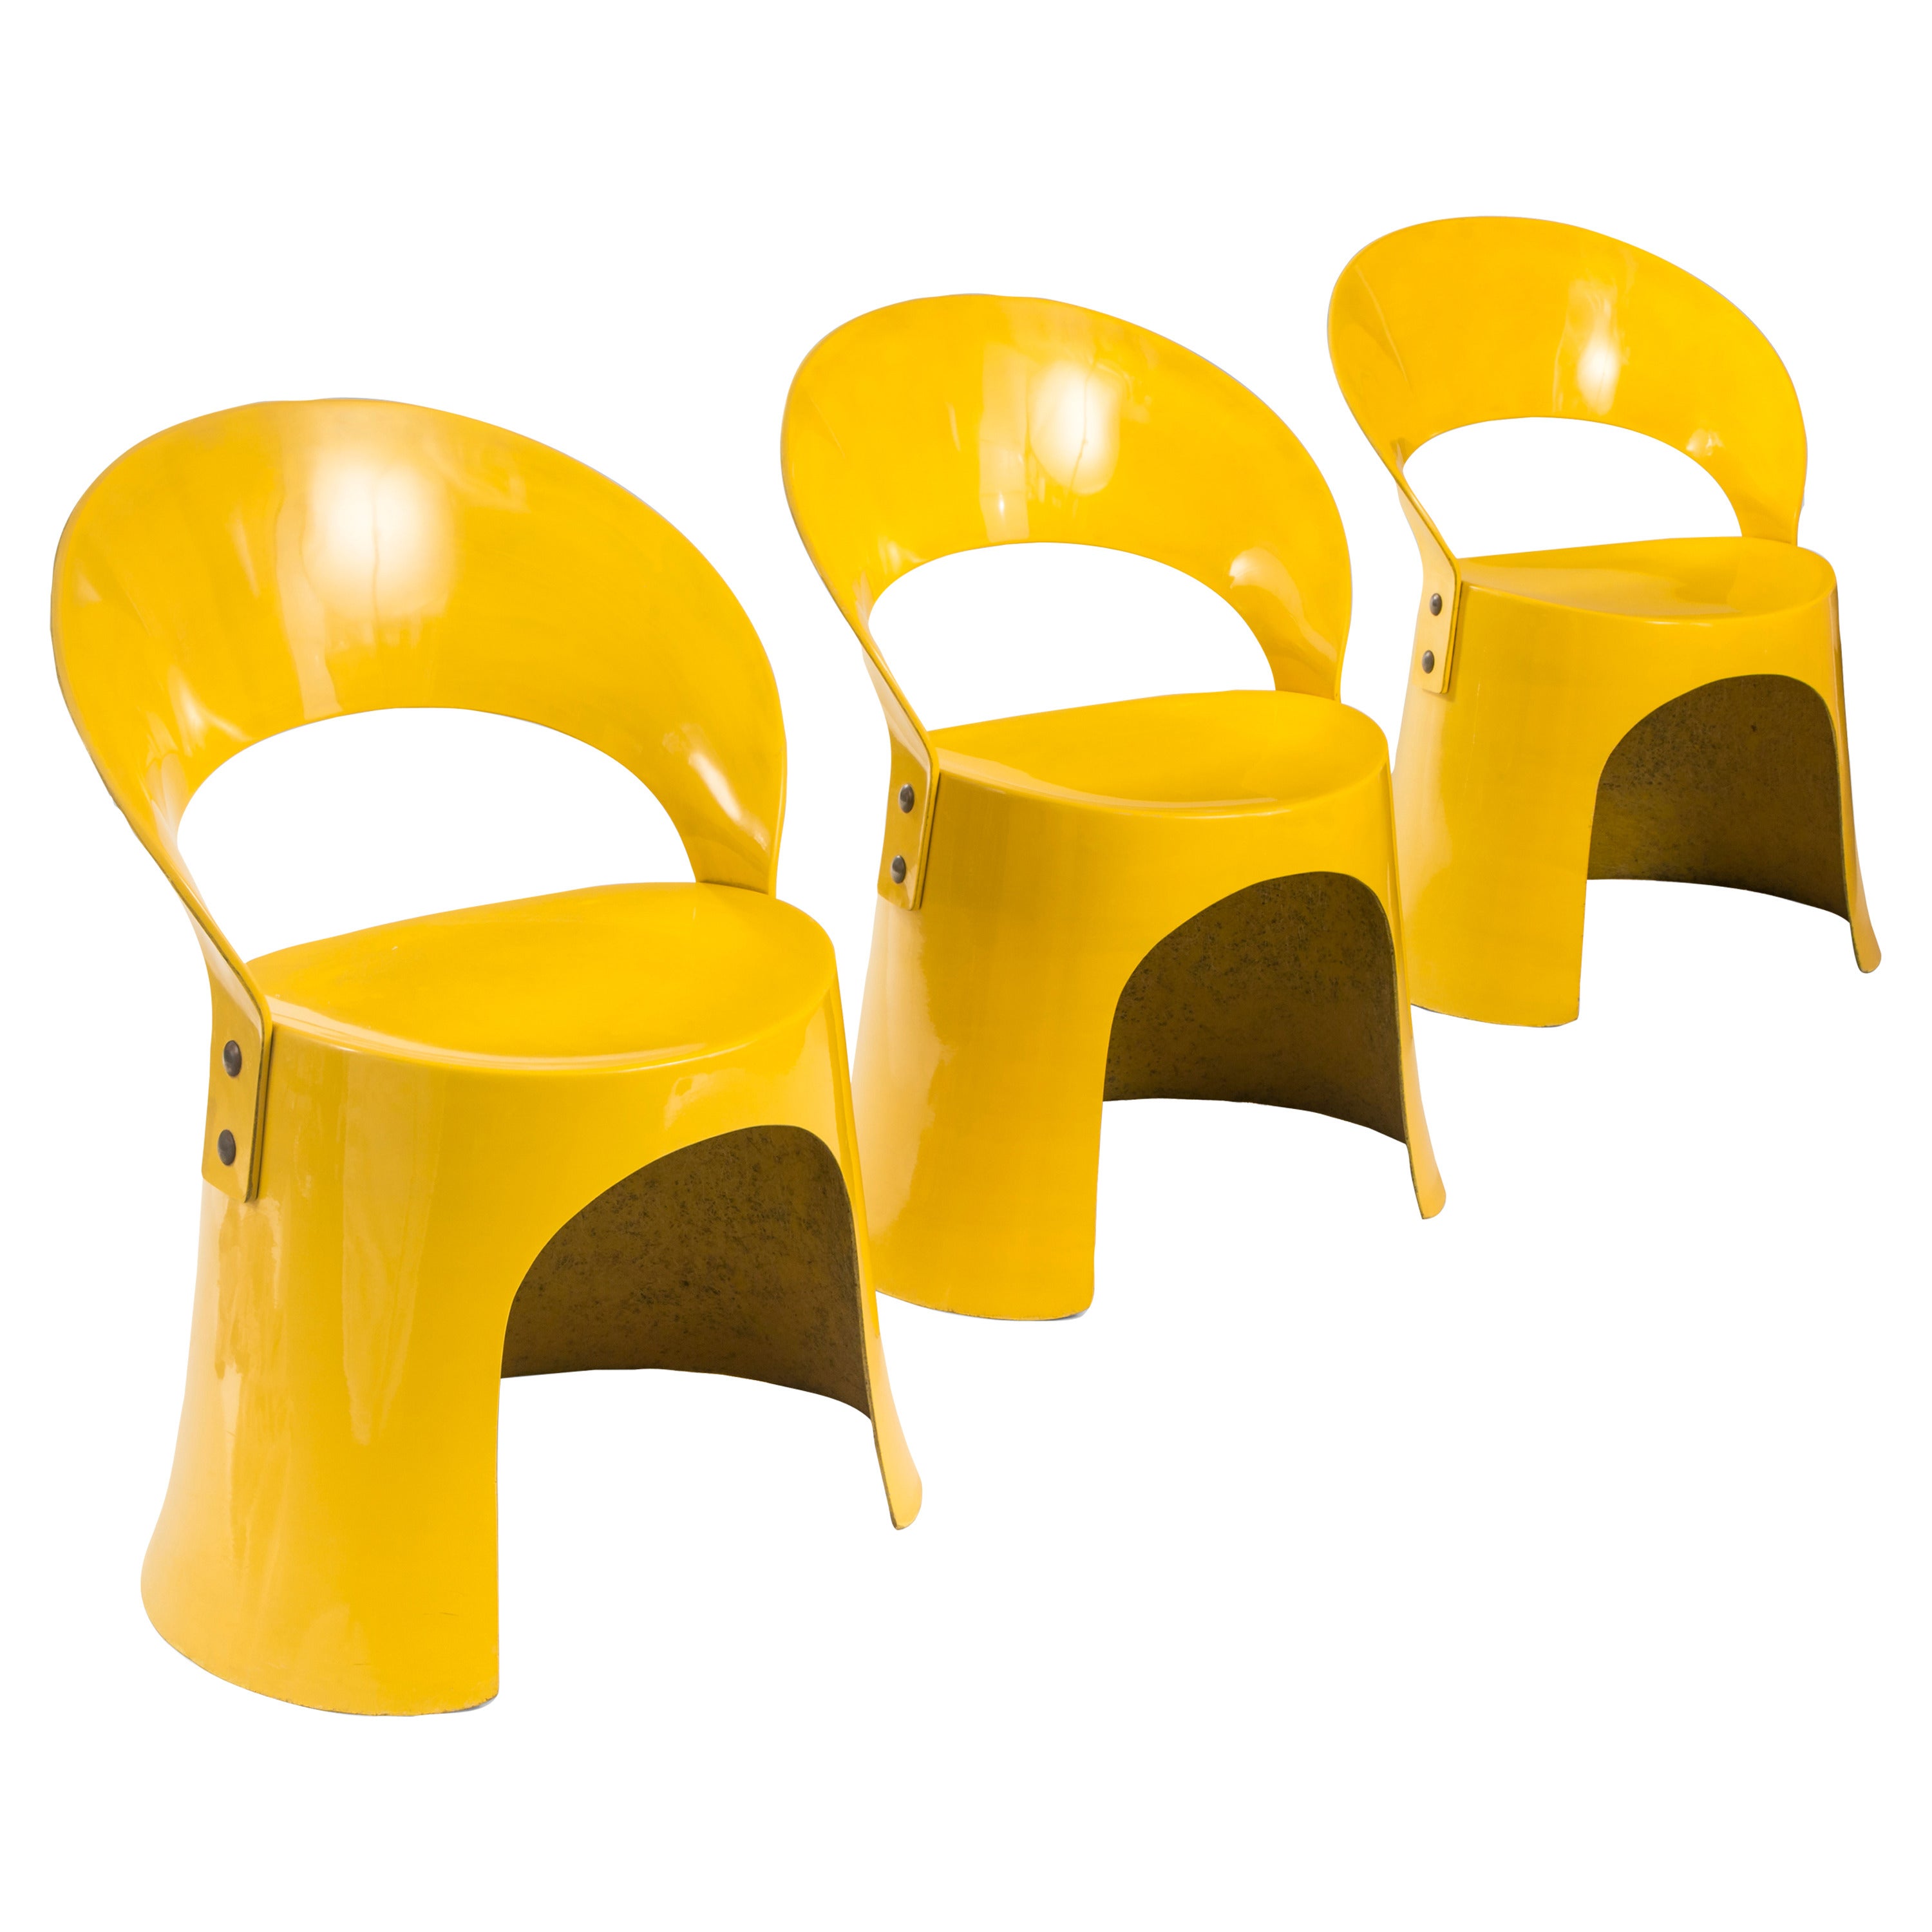 Nanna Ditzel for Oddense Maskinsnedkeri, A Rare Set of 3 Fiberglass Chairs